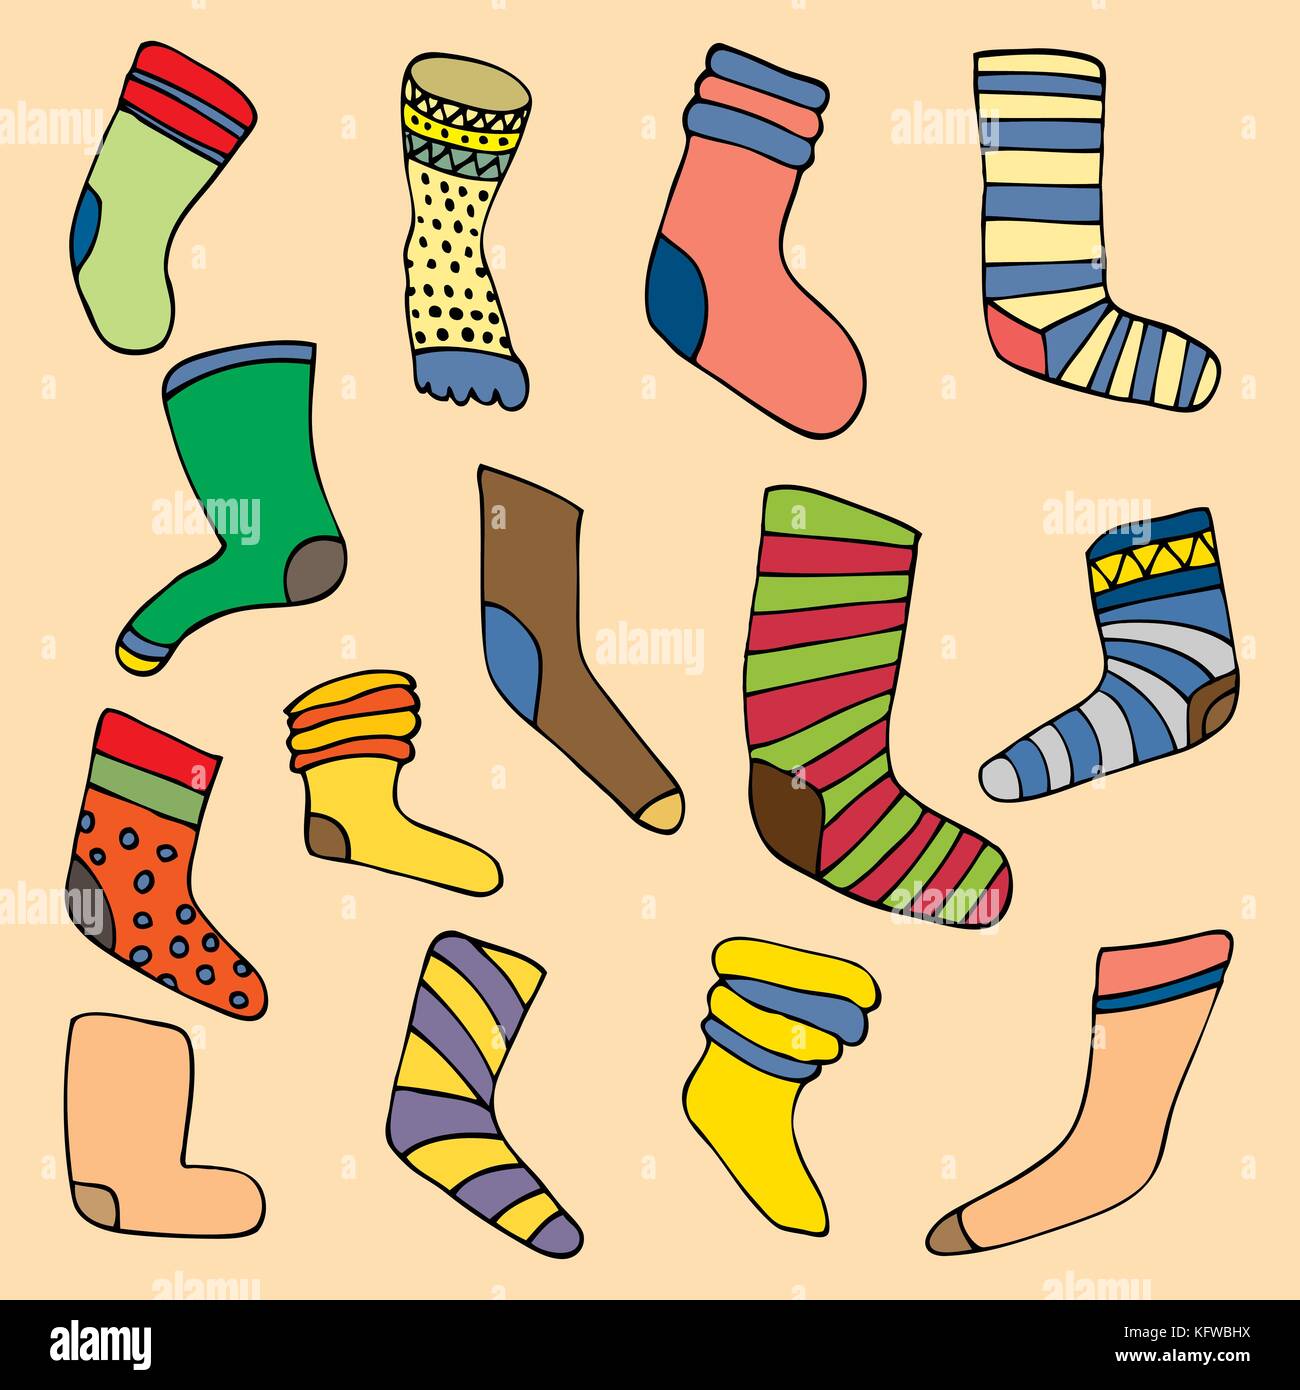 Odd socks Immagini Vettoriali Stock - Alamy